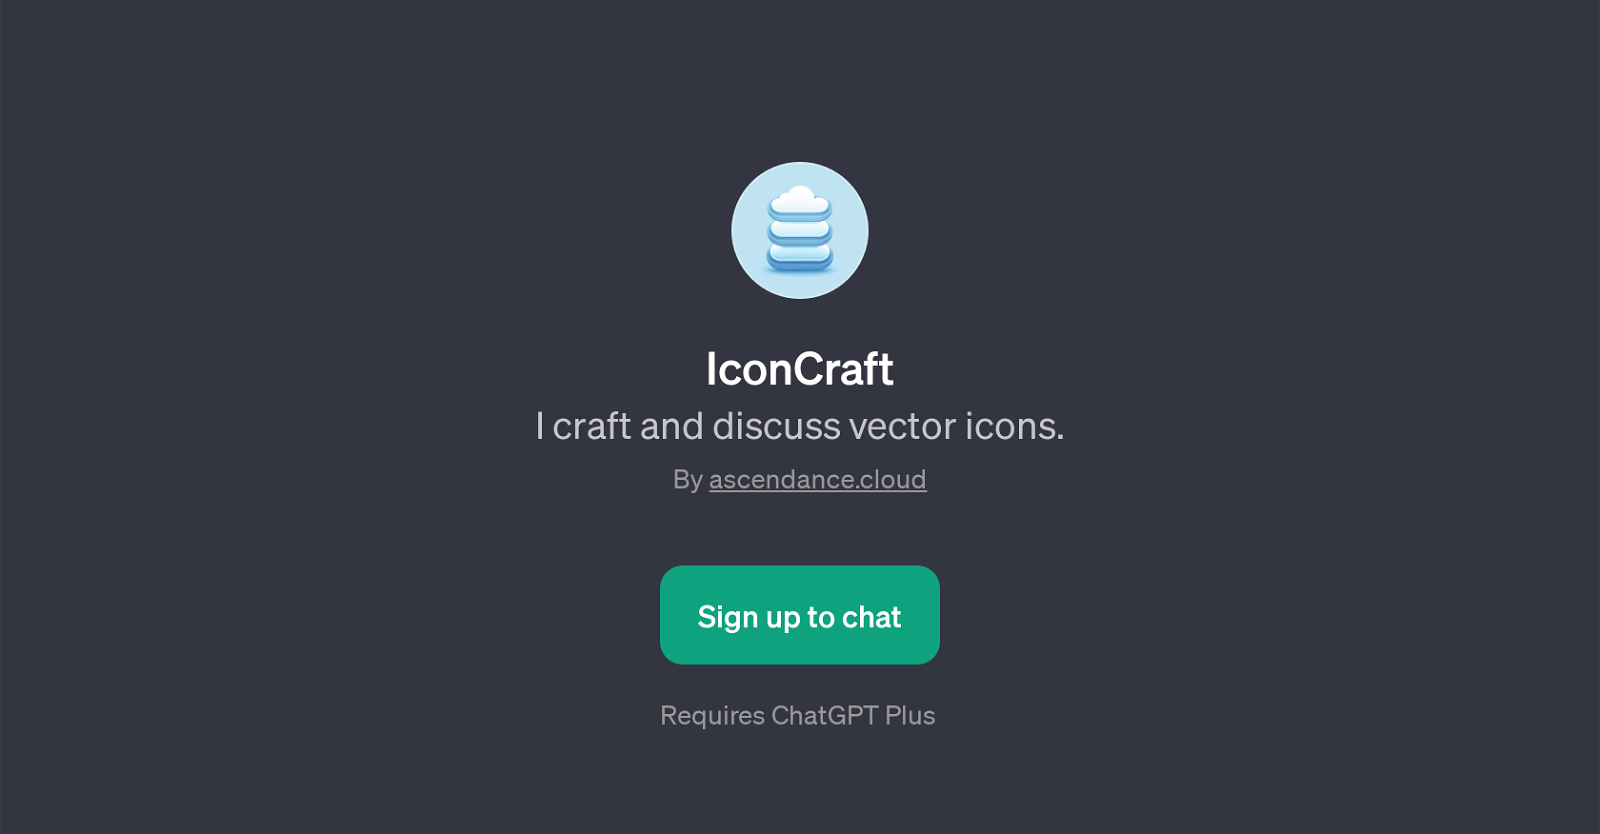 IconCraft website